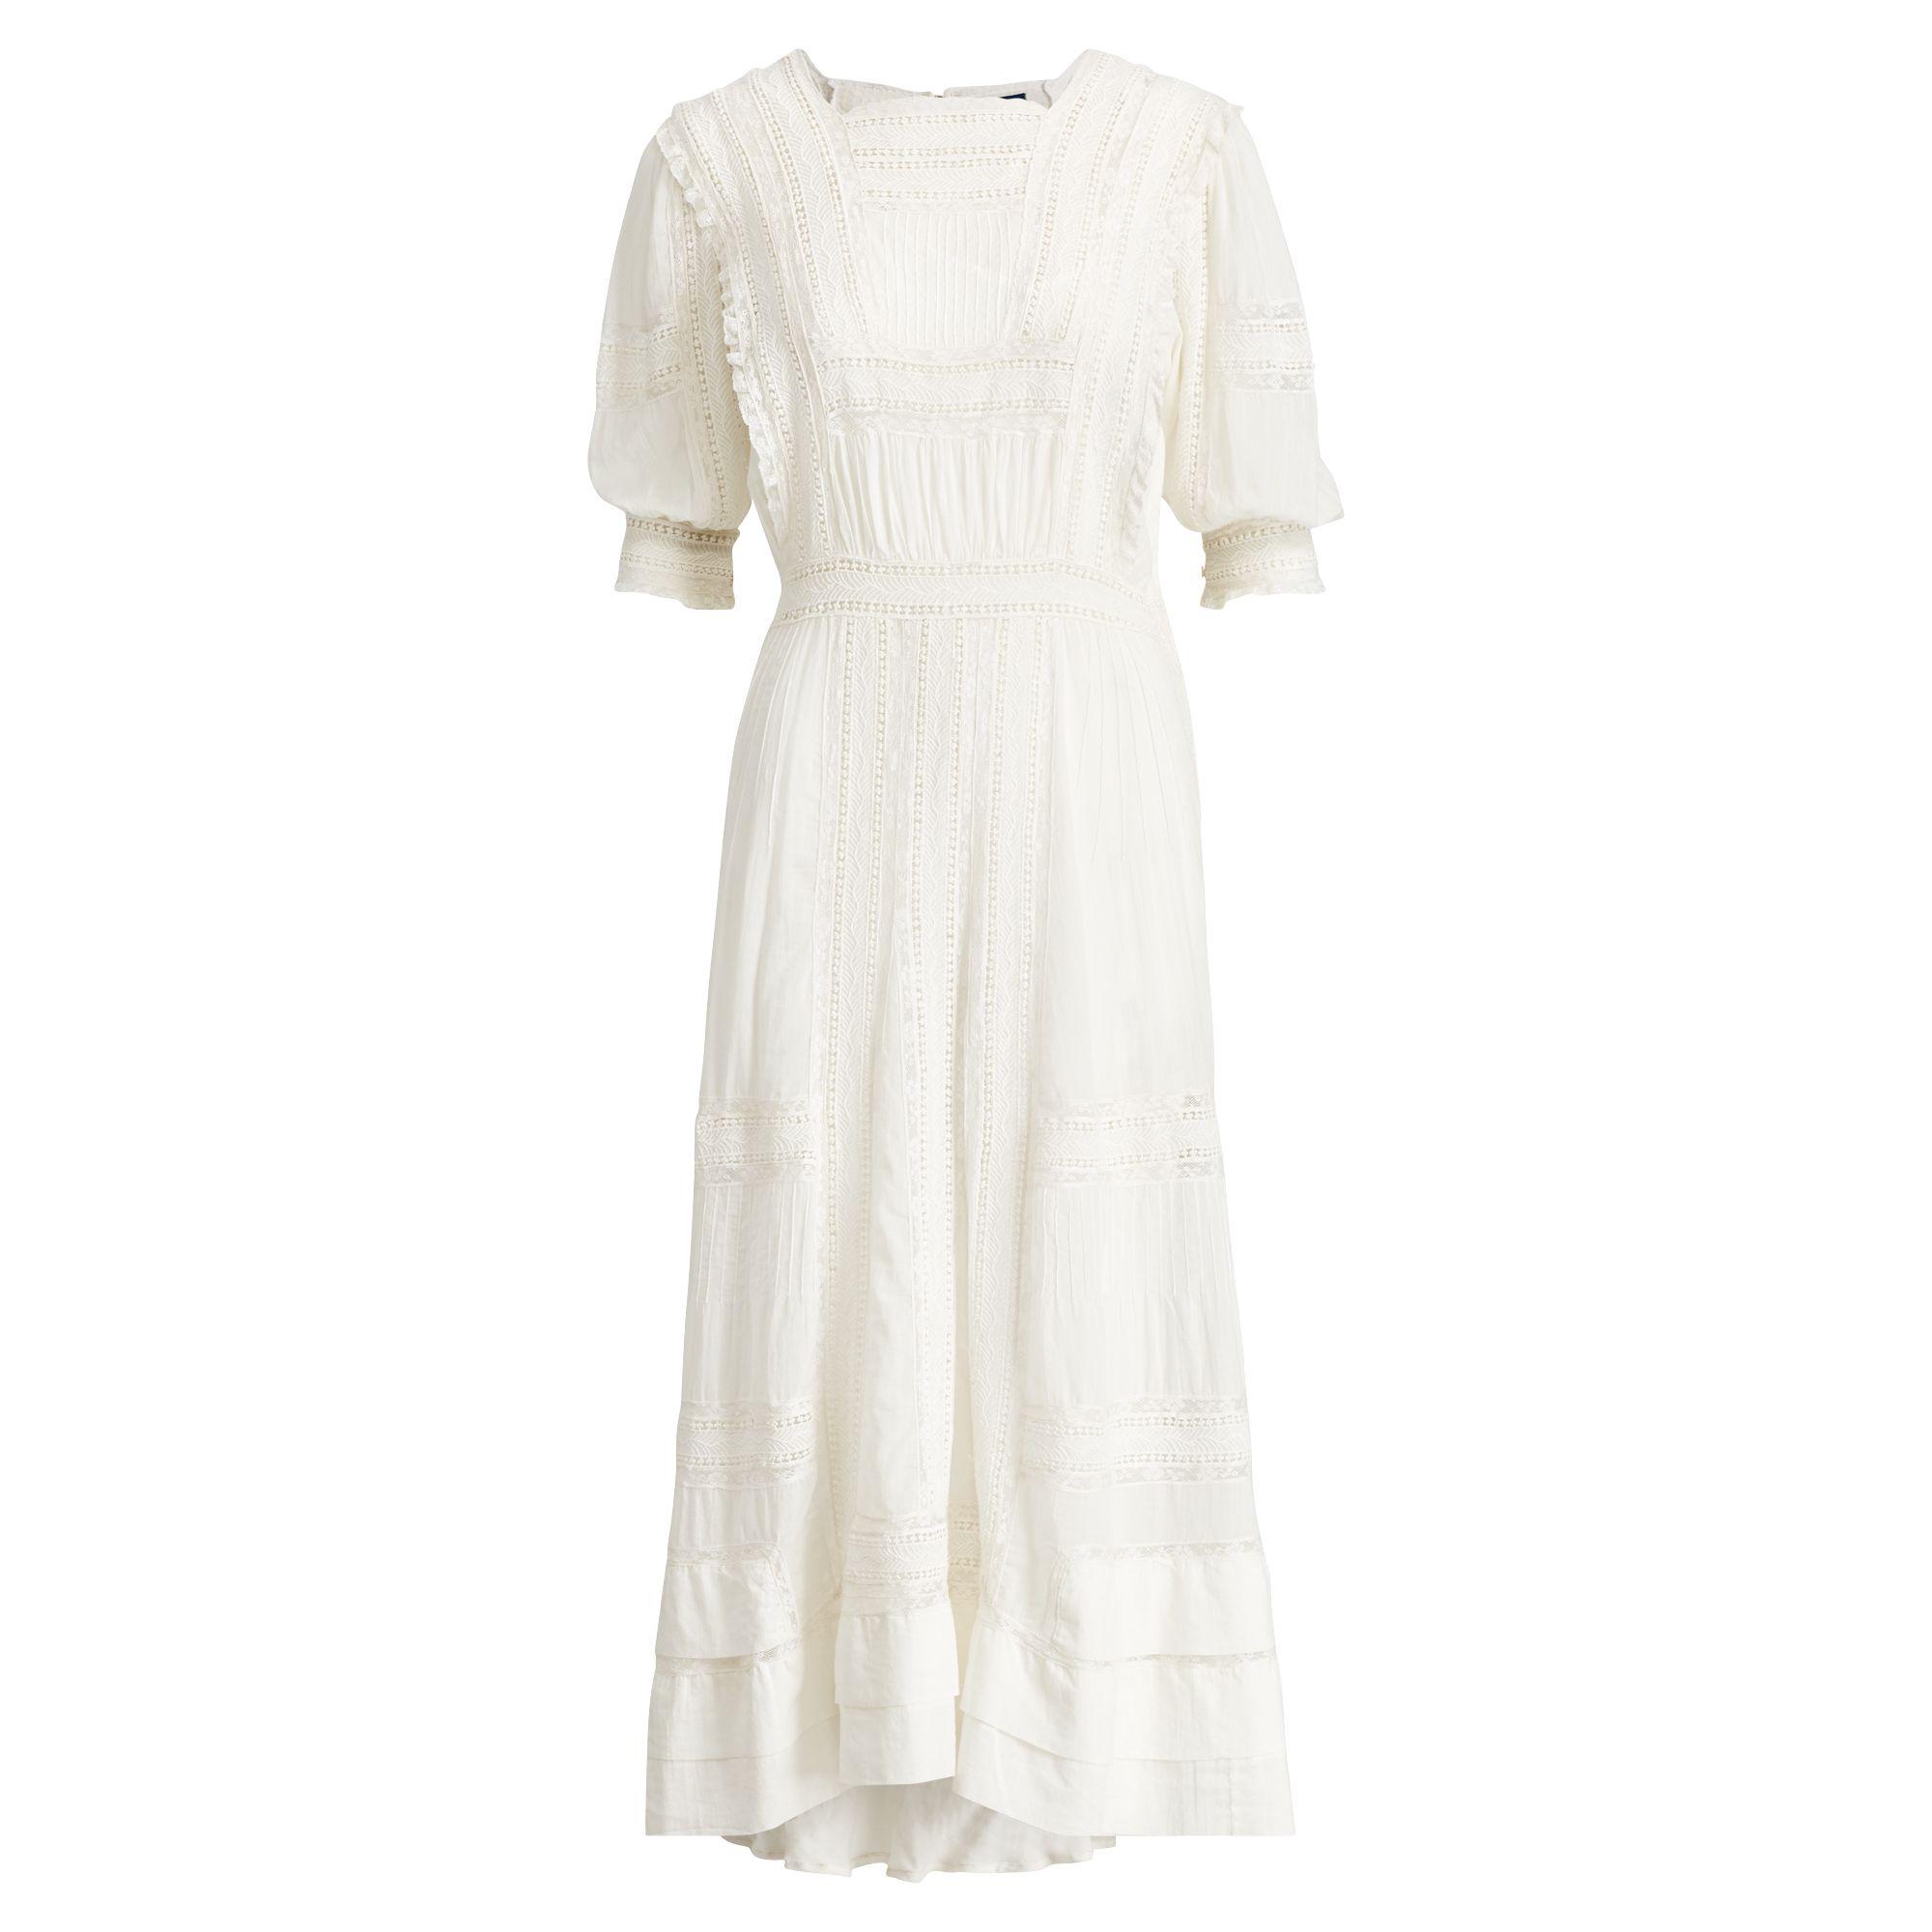 Polo Ralph Lauren Cotton Voile Midi Dress in Antique White (White) - Lyst